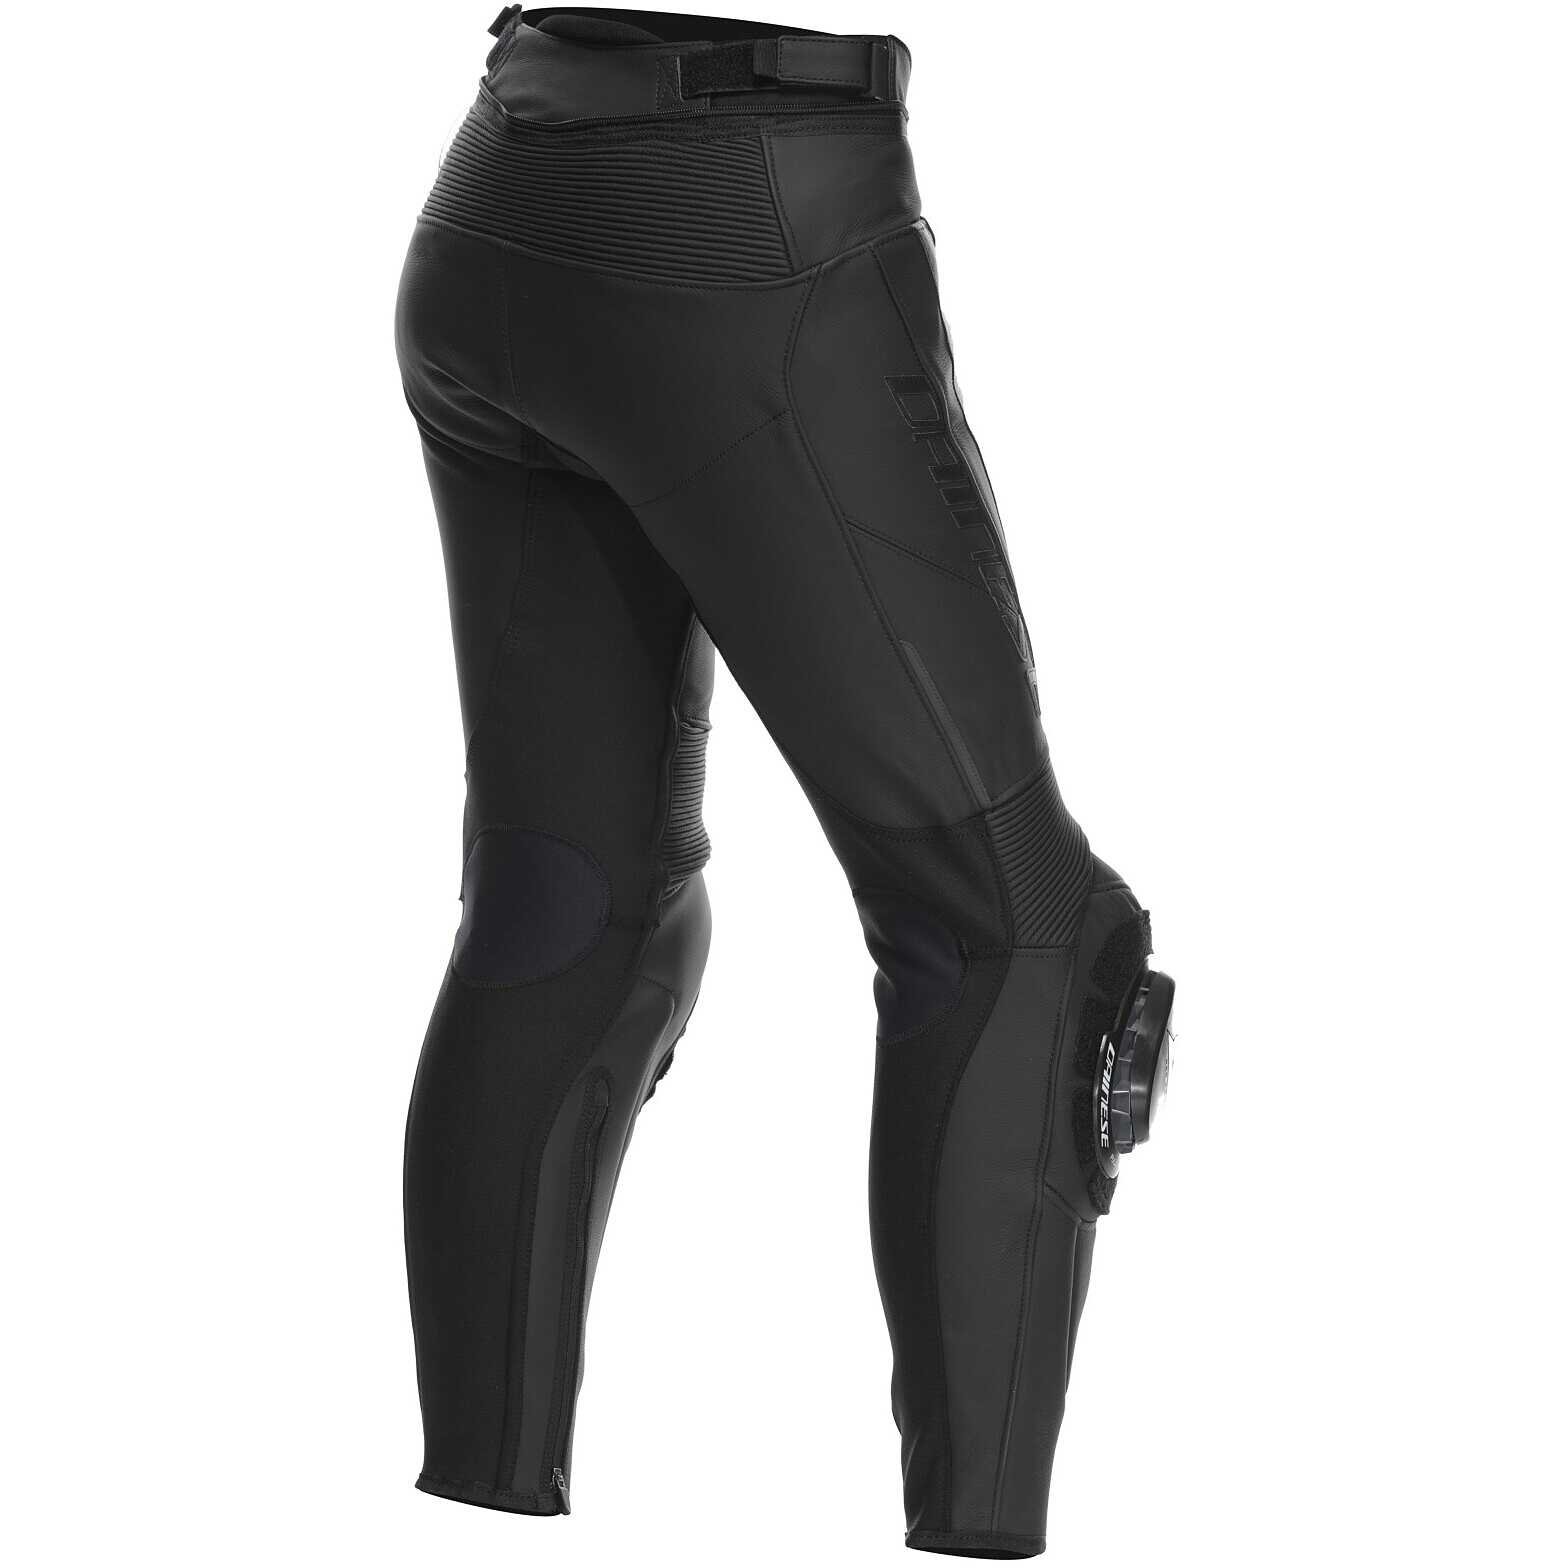 Dainese DELTA 4 WMN Women's Leather Motorcycle Pants Black Black For Sale  Online 